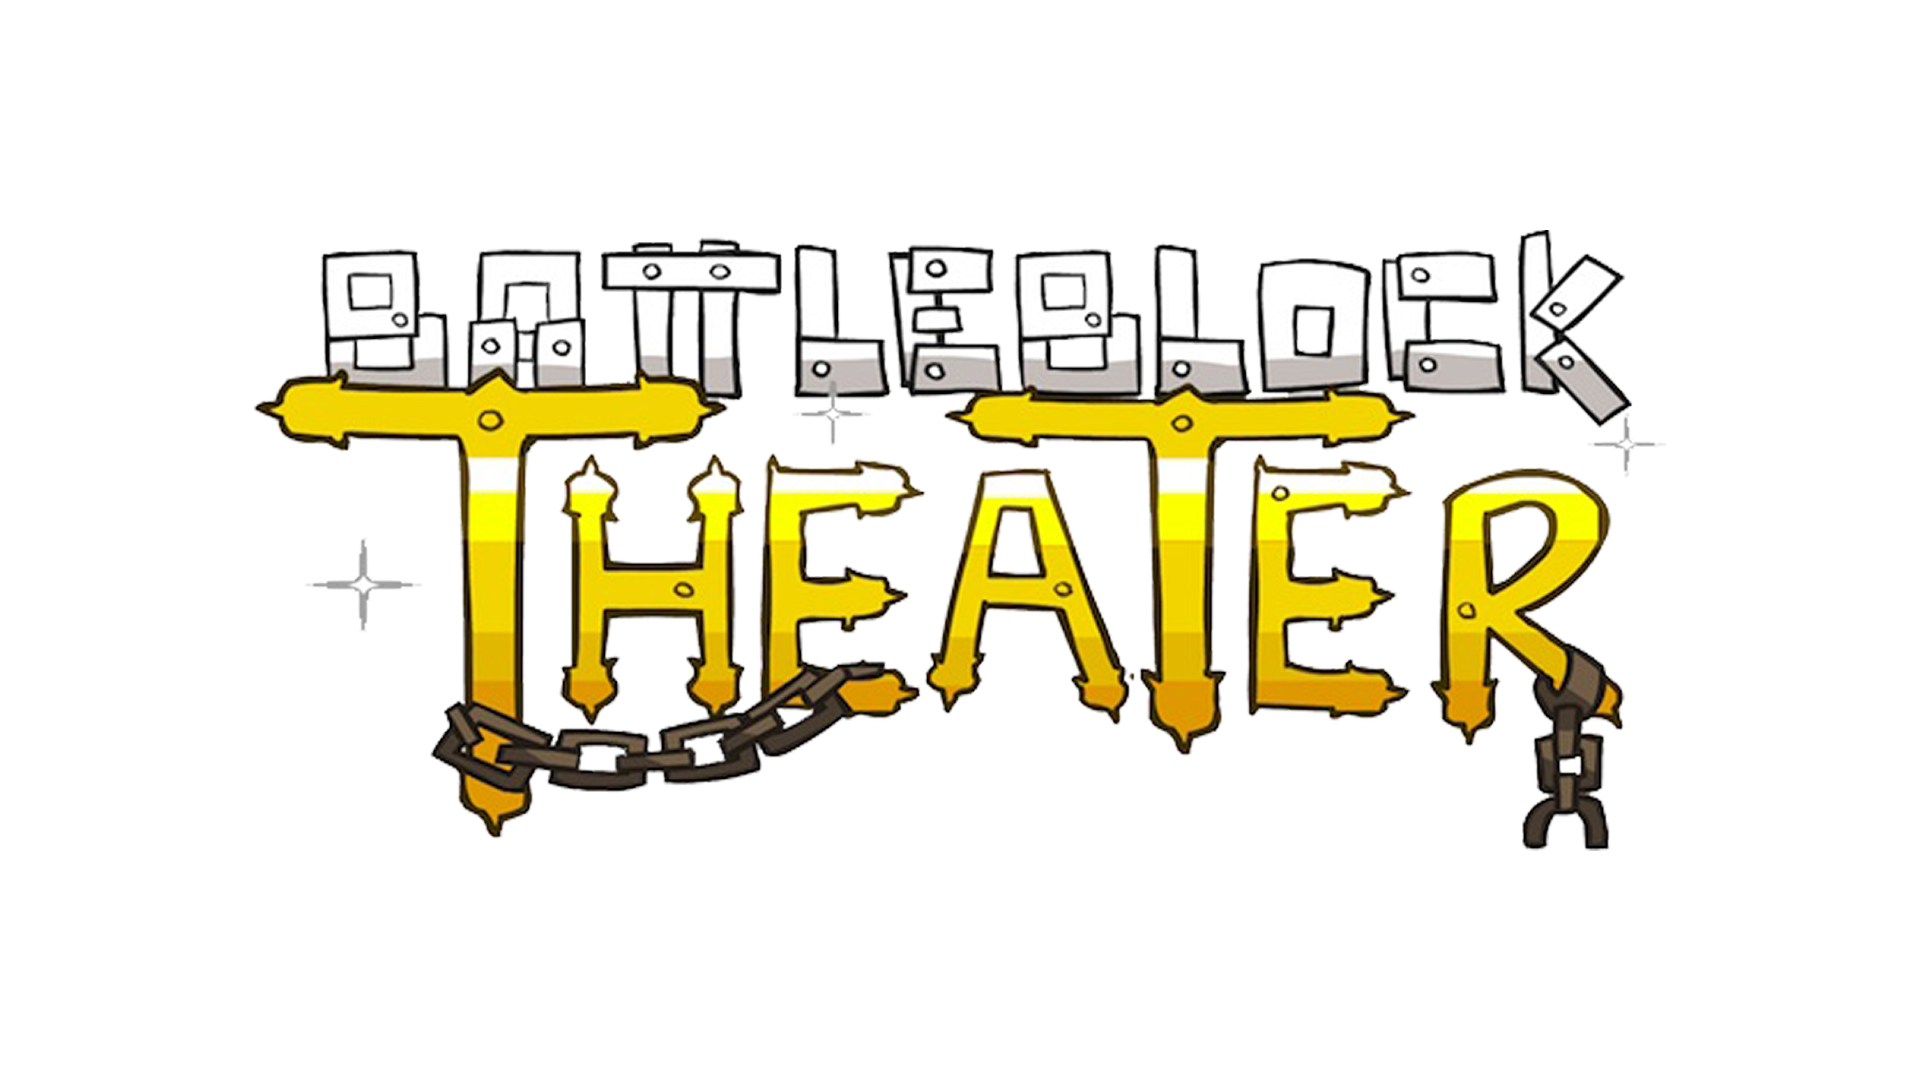 BattleBlock Theater logo